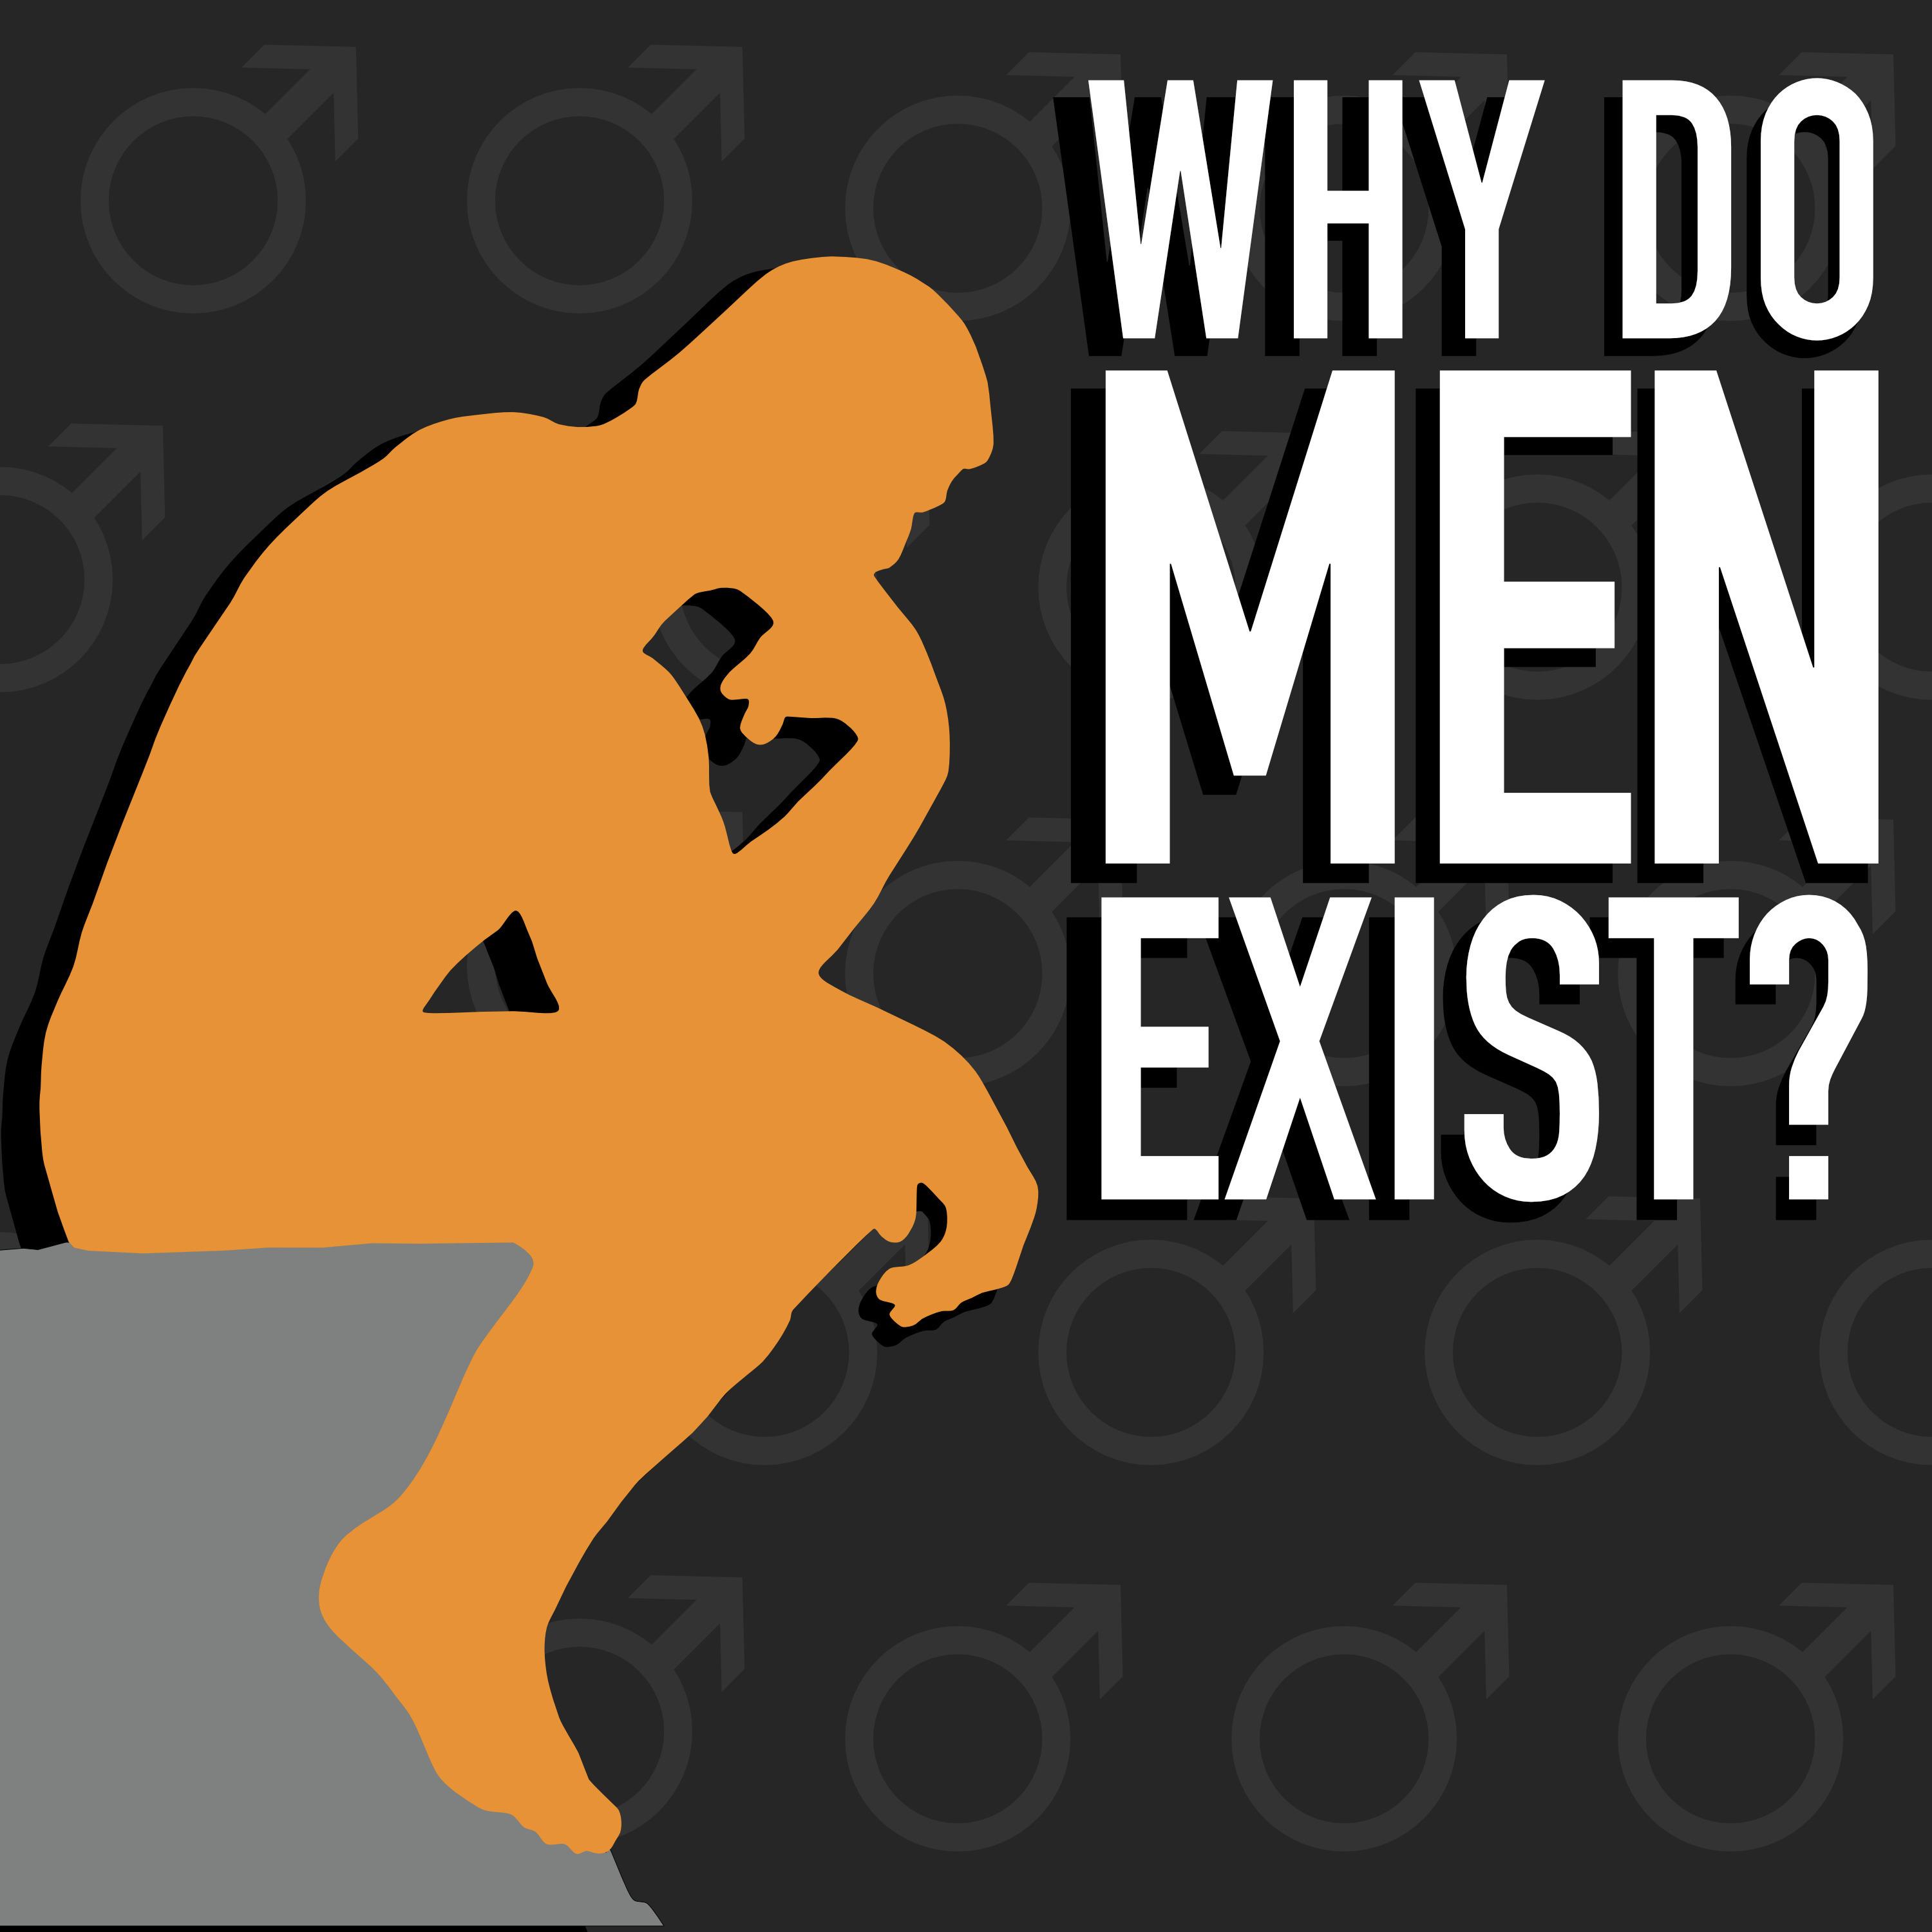 Why do men exist?